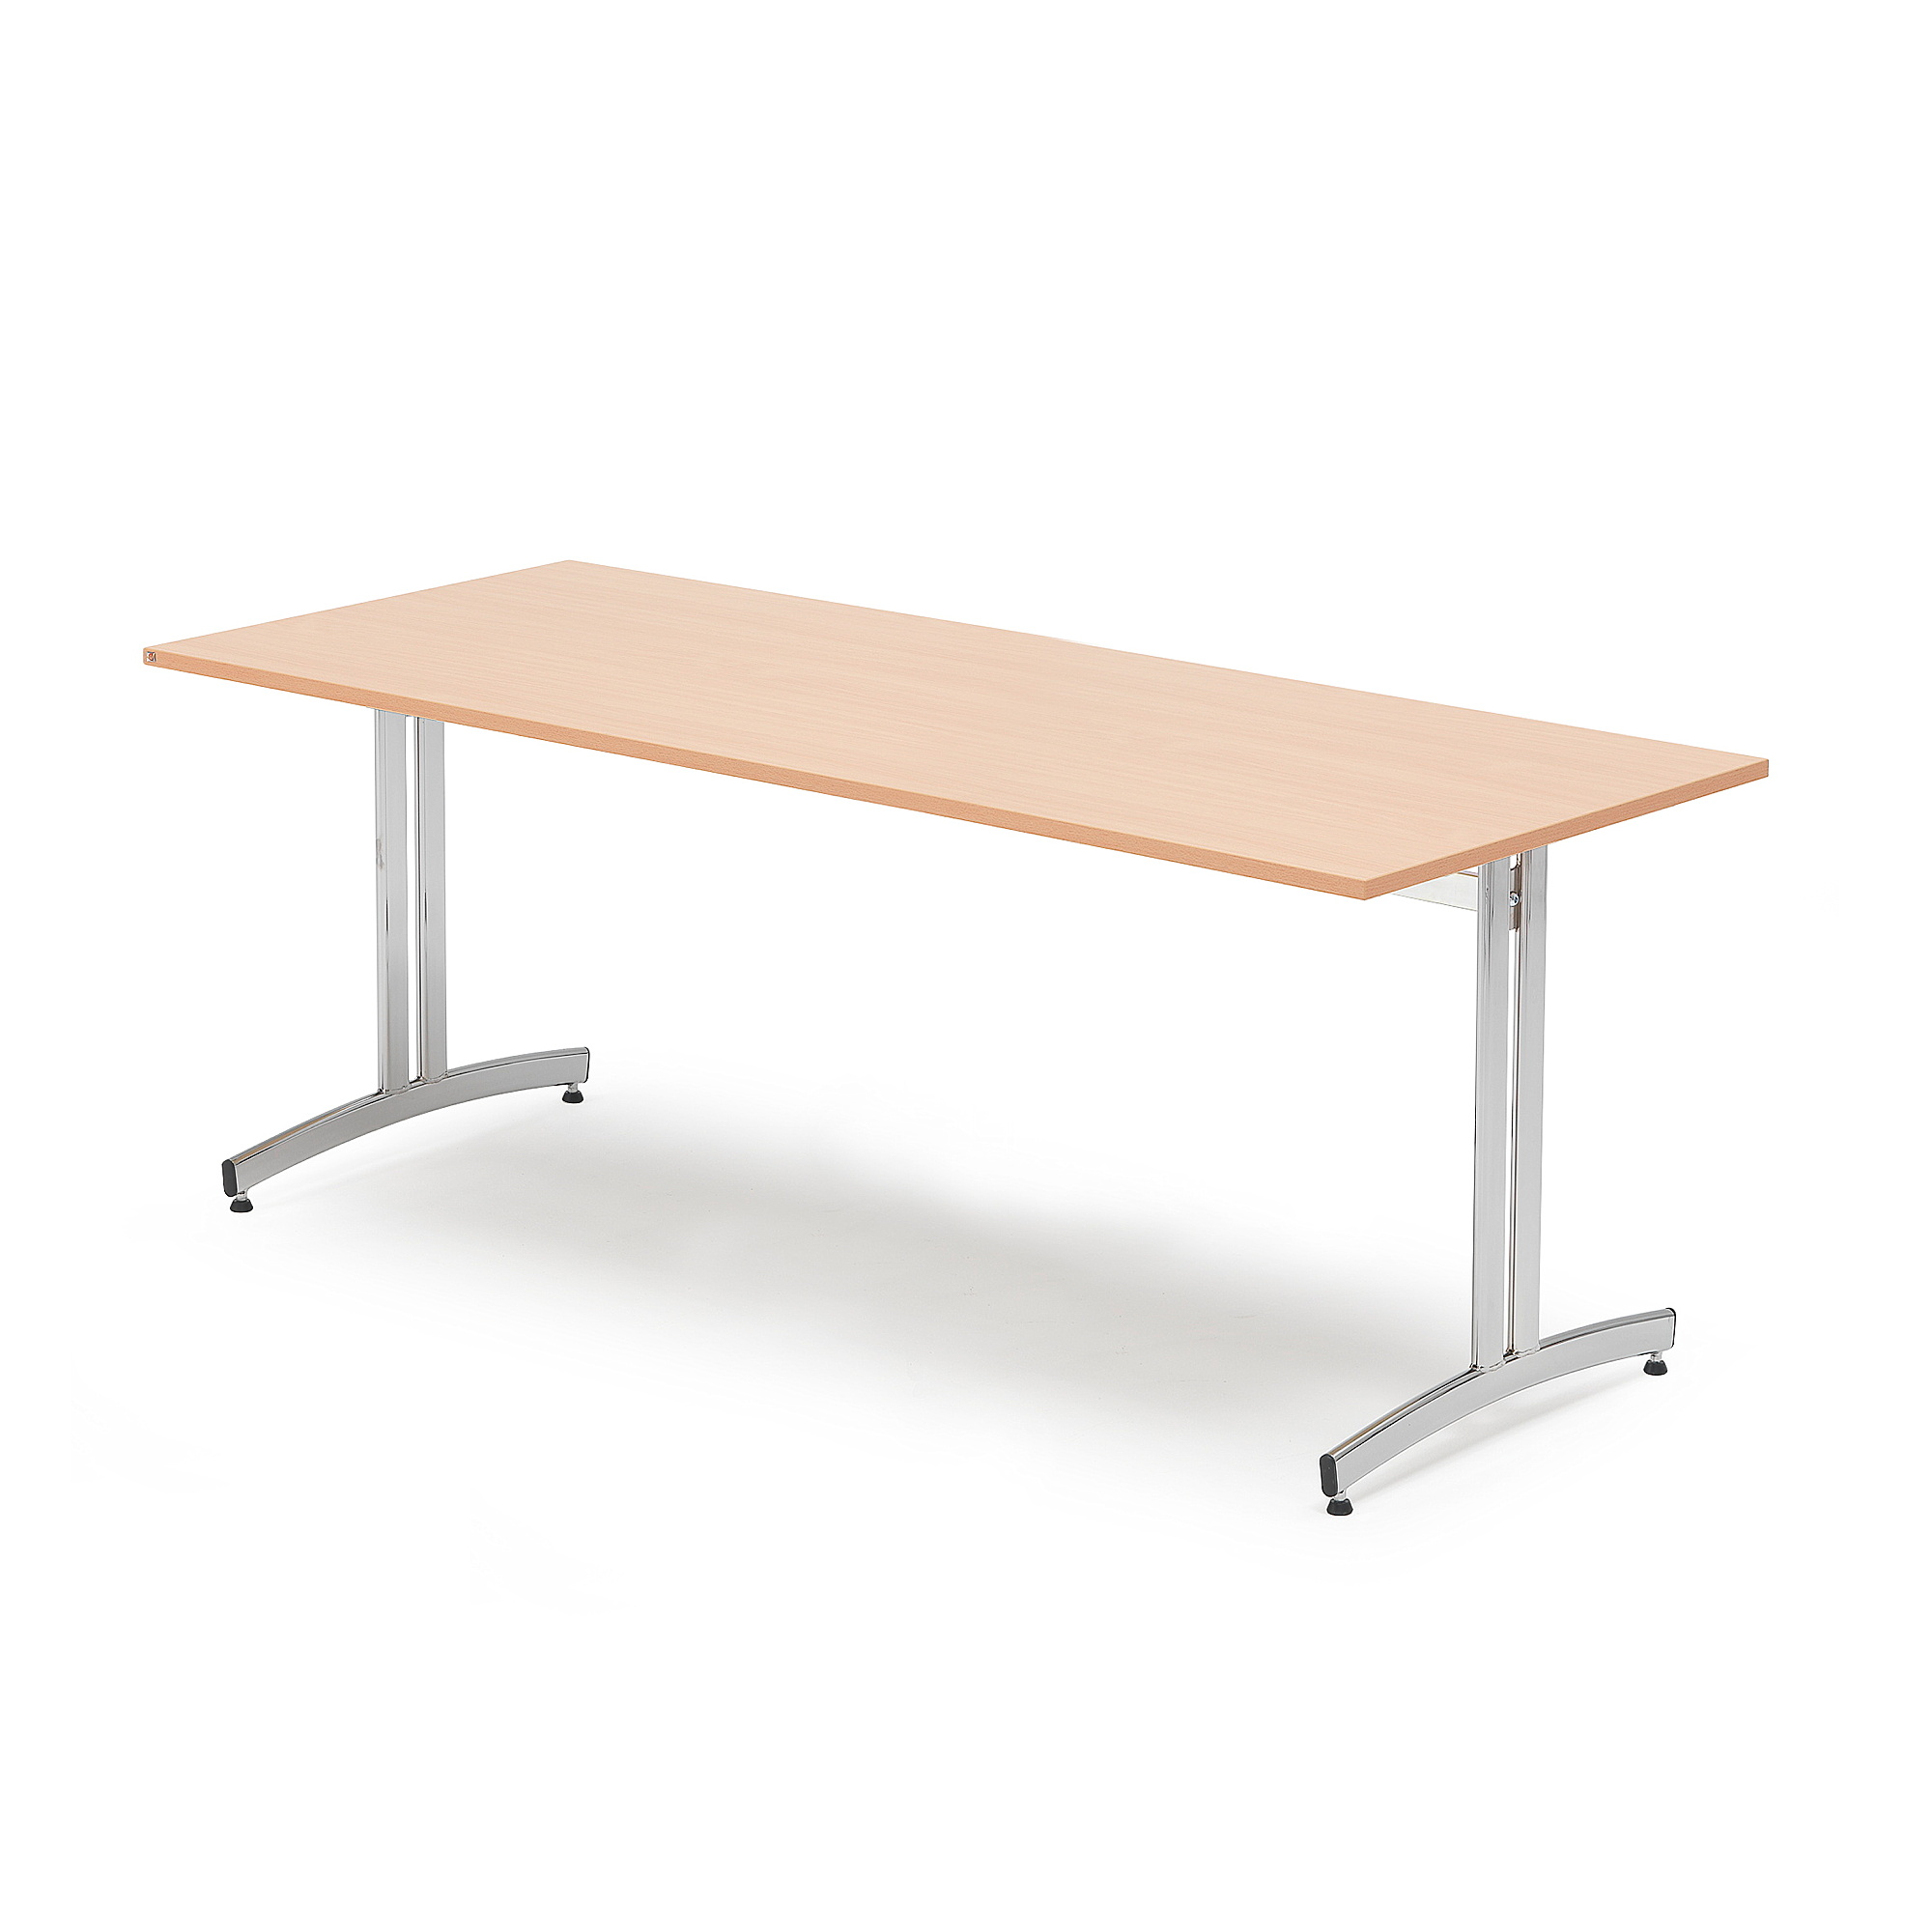 Stůl SANNA, 1800x800x720 mm, chrom/buk